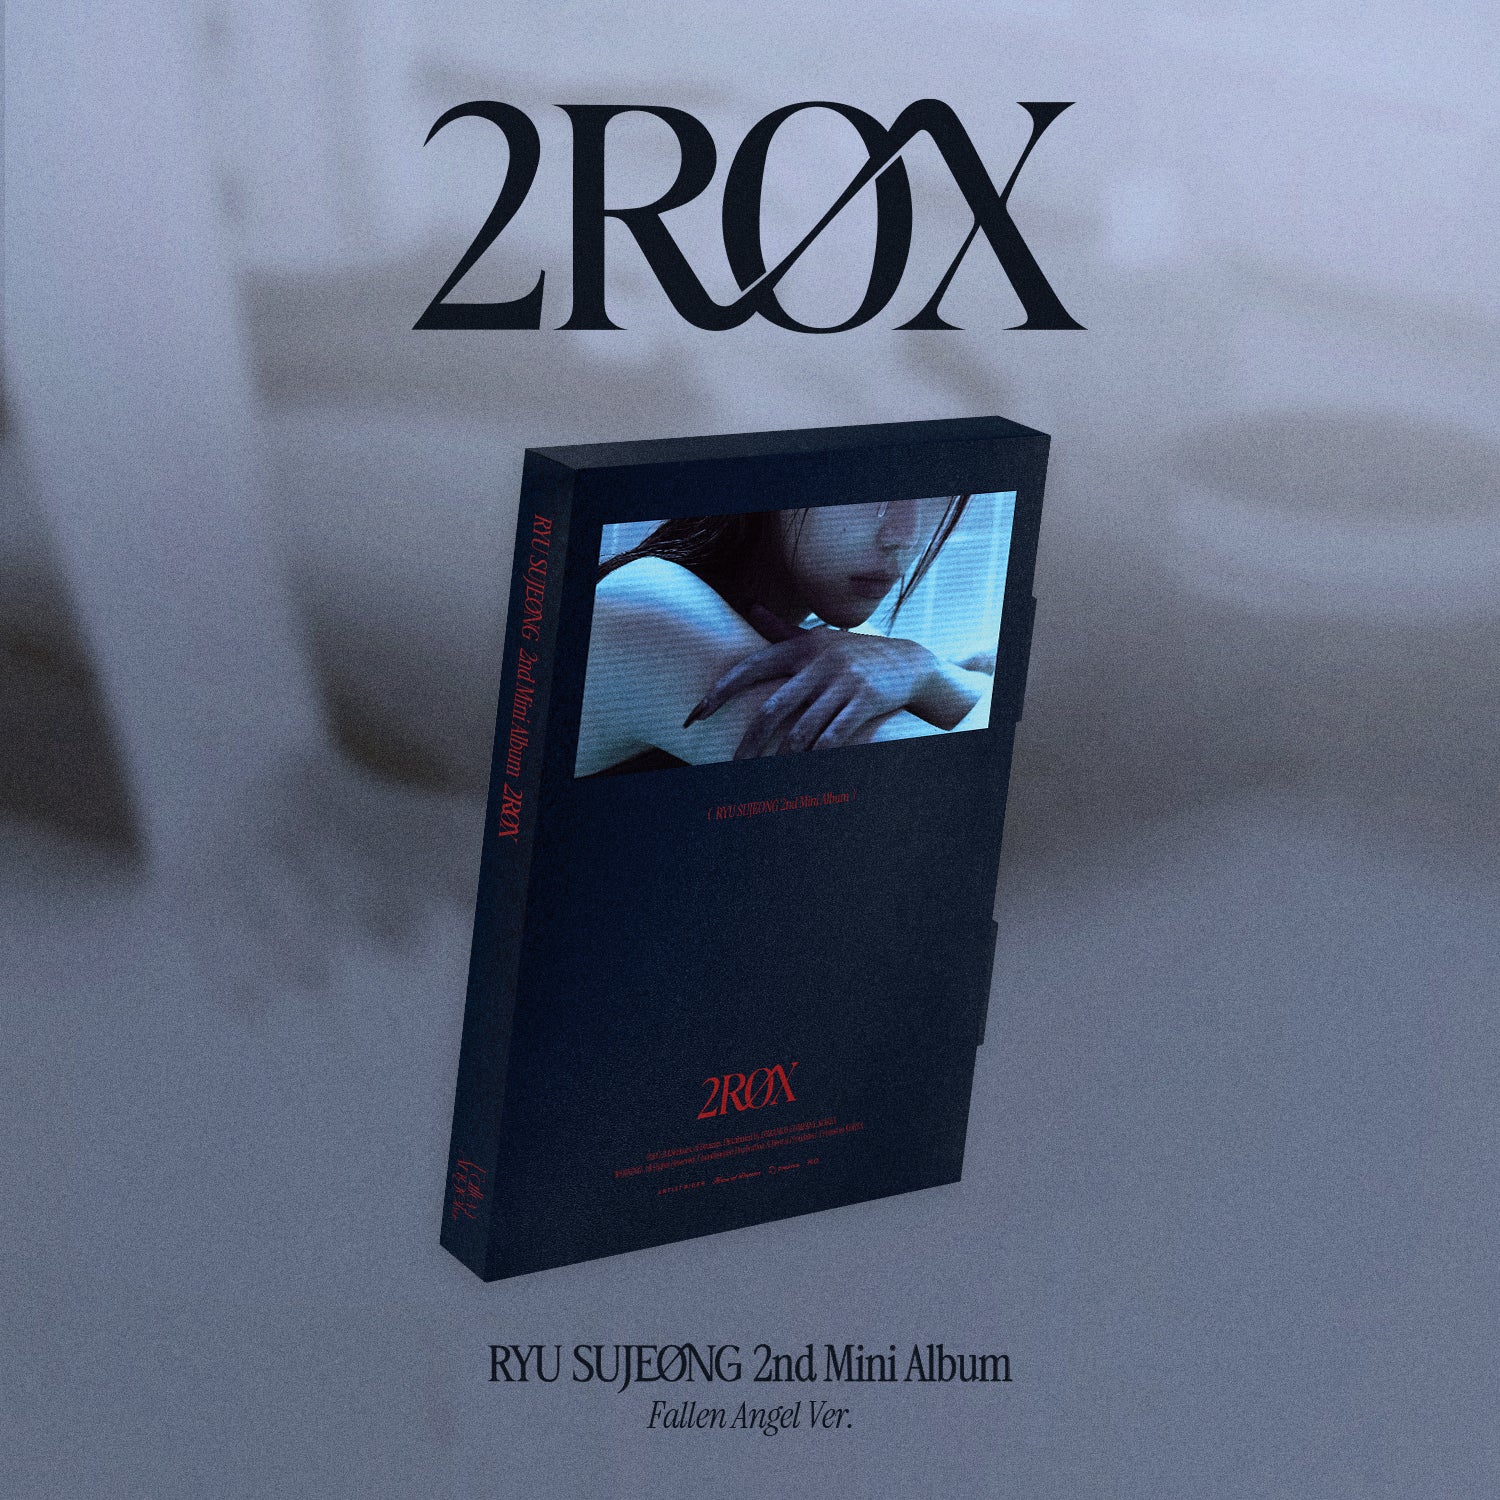 RYU SUJEONG - 2nd Mini Album 2ROX